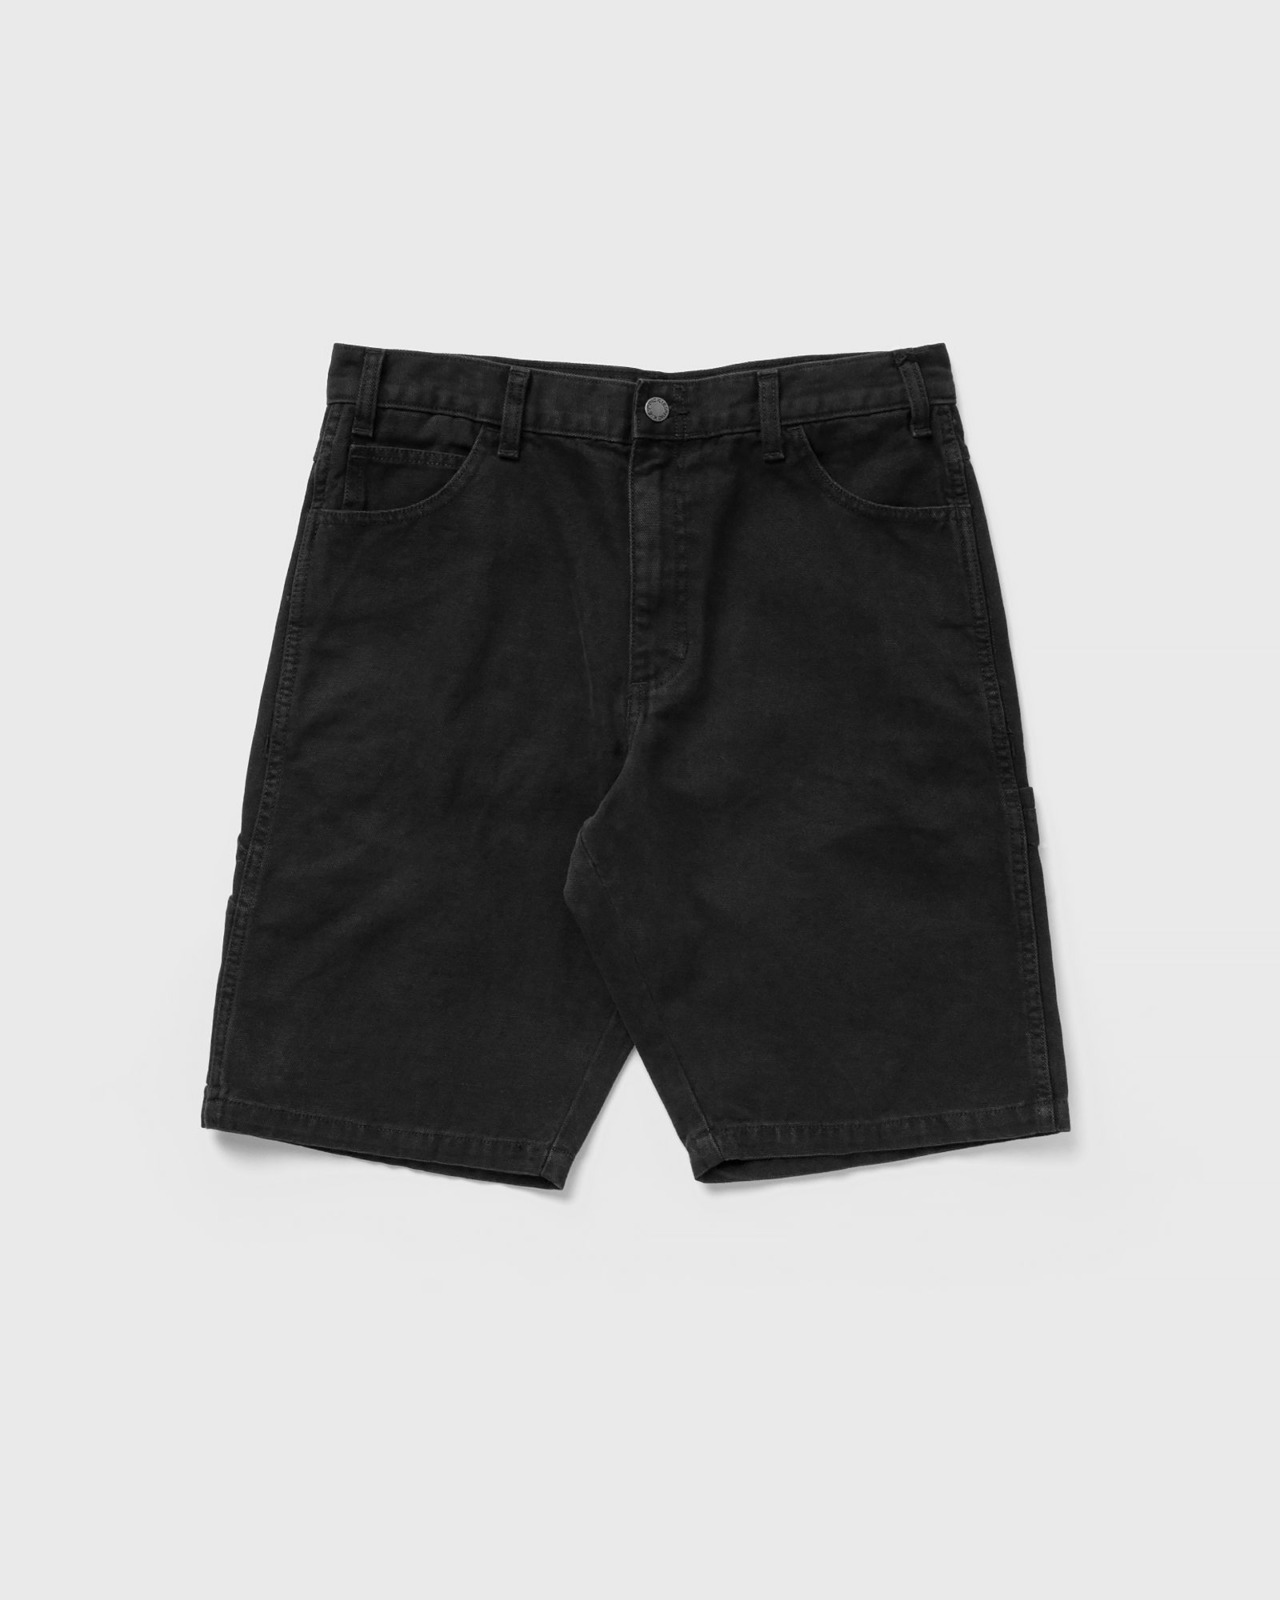 Bstn - Mens Casual Shorts - Black GOOFASH